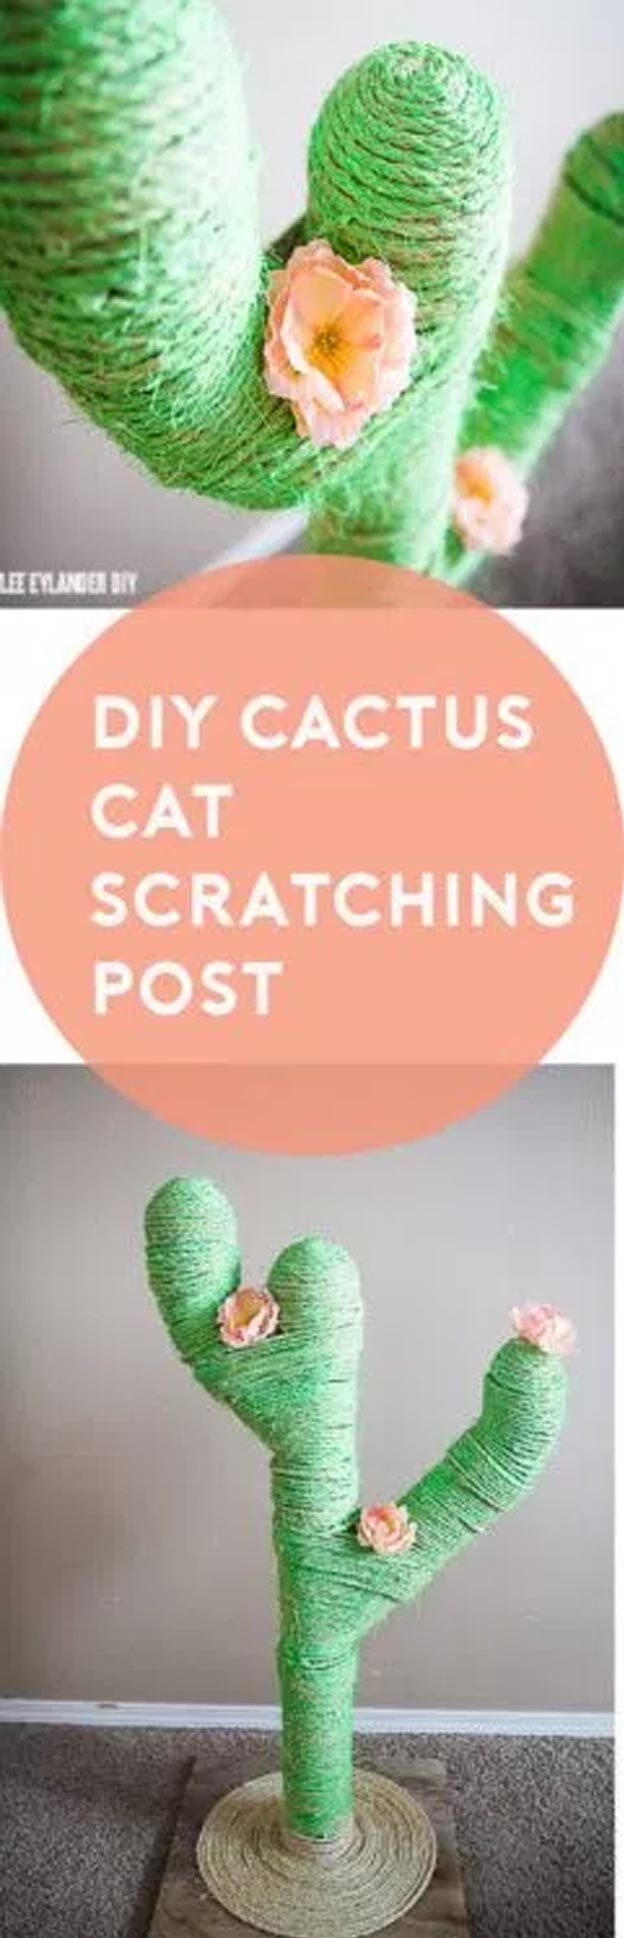 Cactus Party Decor - DIY Cactus Cat Scratching Post - Paper Cactus Crafts - Outdoor Cactus Decorations - DIY Crafts for Room Decor - Homemade Craft Ideas - Cactus Wall - 5 Minute Cactus Crafts #teencrafts #diyideas #cactuscrafts